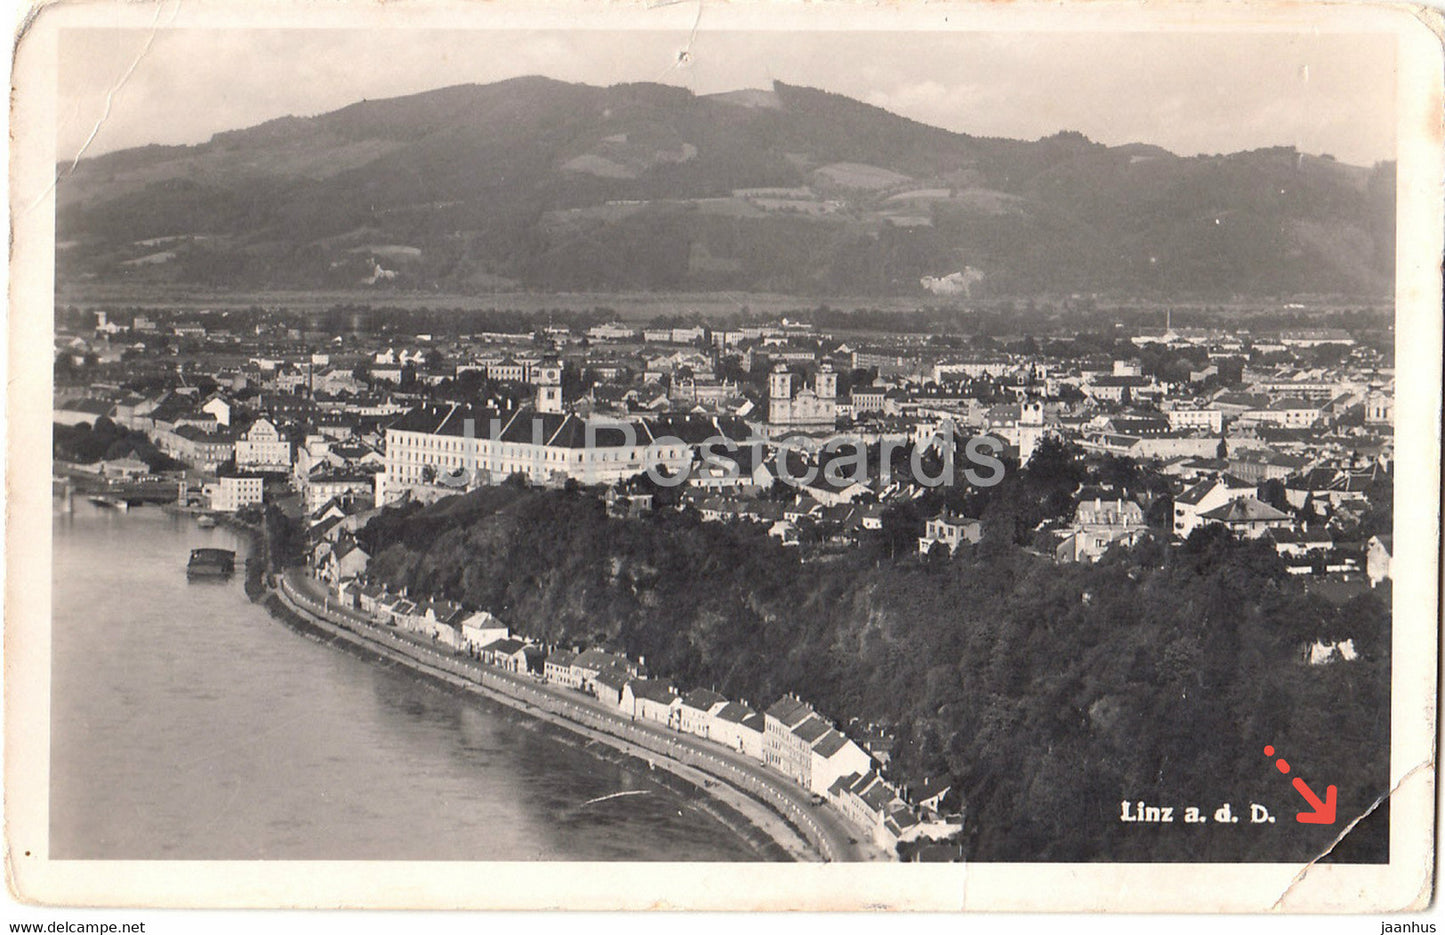 Linz a d D - 2651 - old postcard - 1942 - Austria - used - JH Postcards